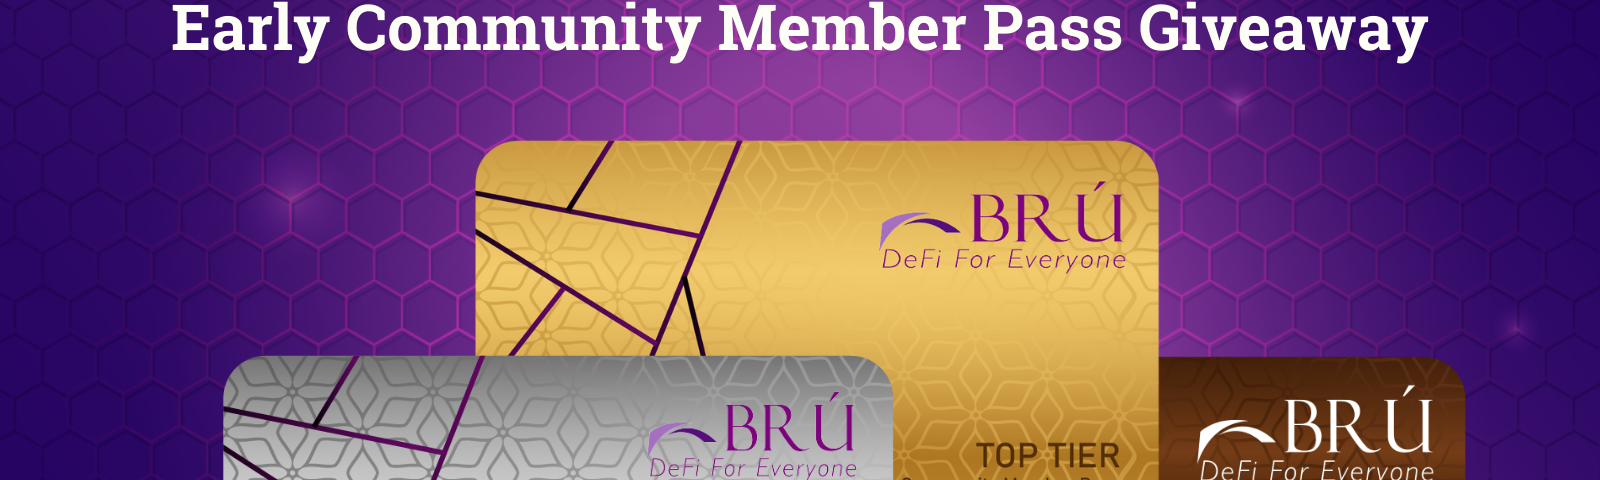 Bru Finance: Early Community Member Pass